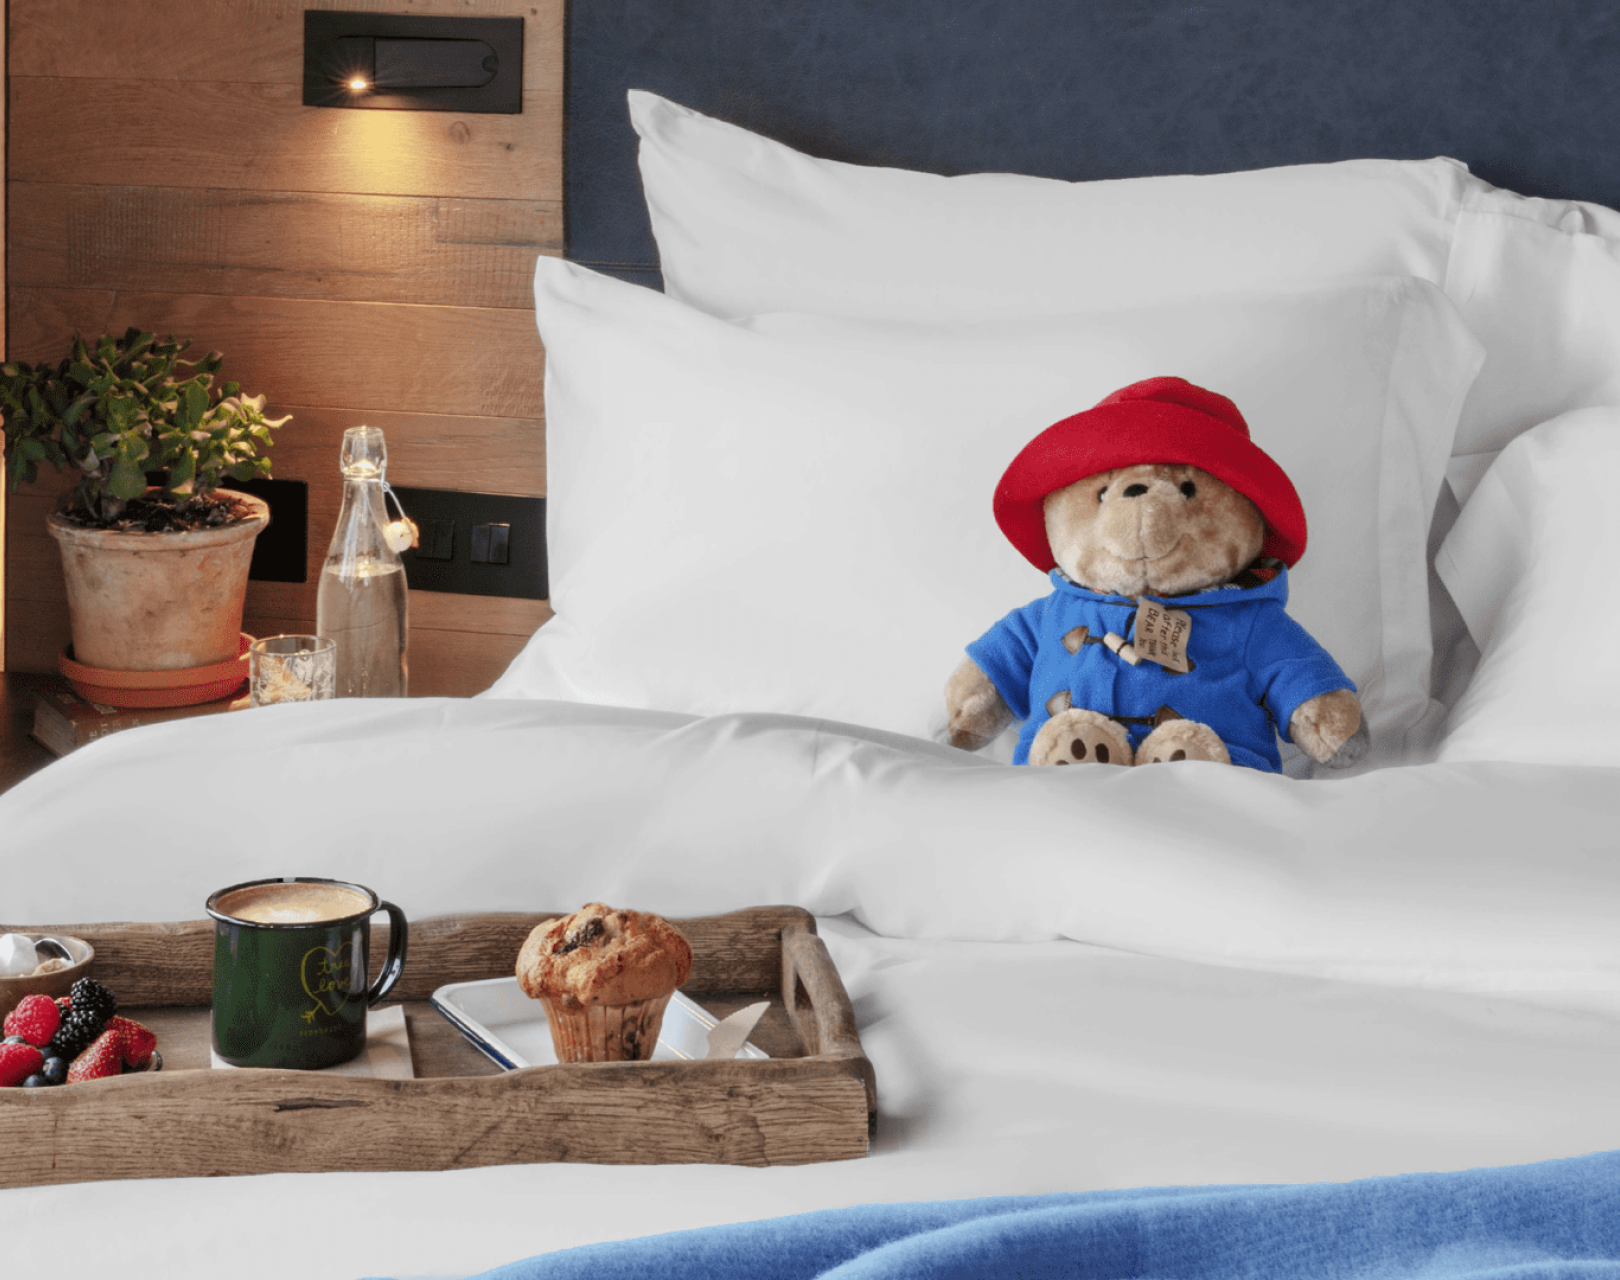 Paddington bear on hotel bed